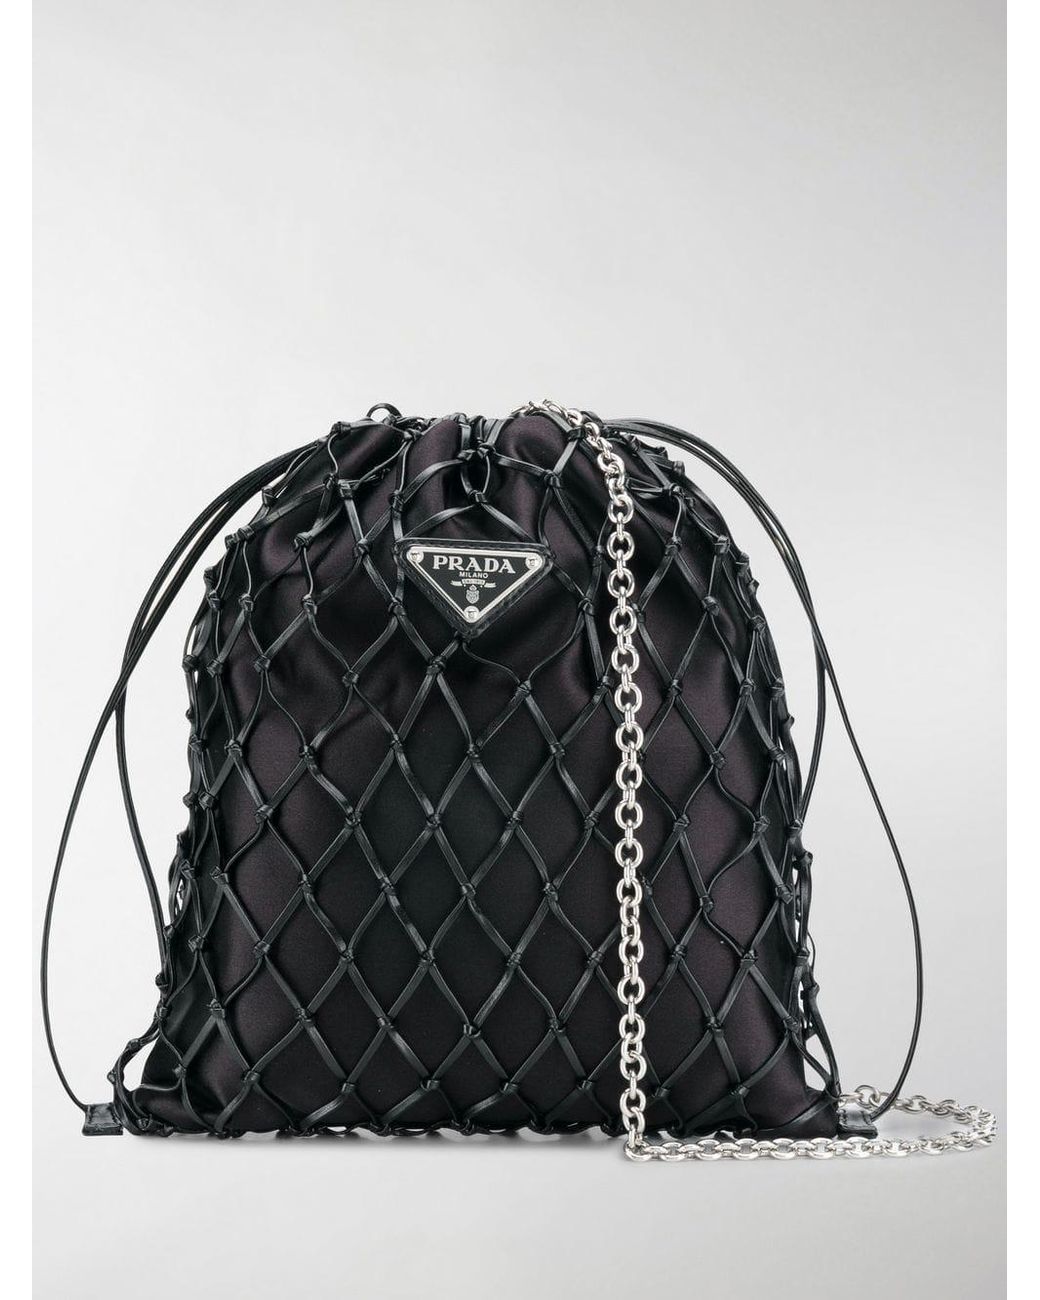 Prada Net Crossbody Bag in Black | Lyst